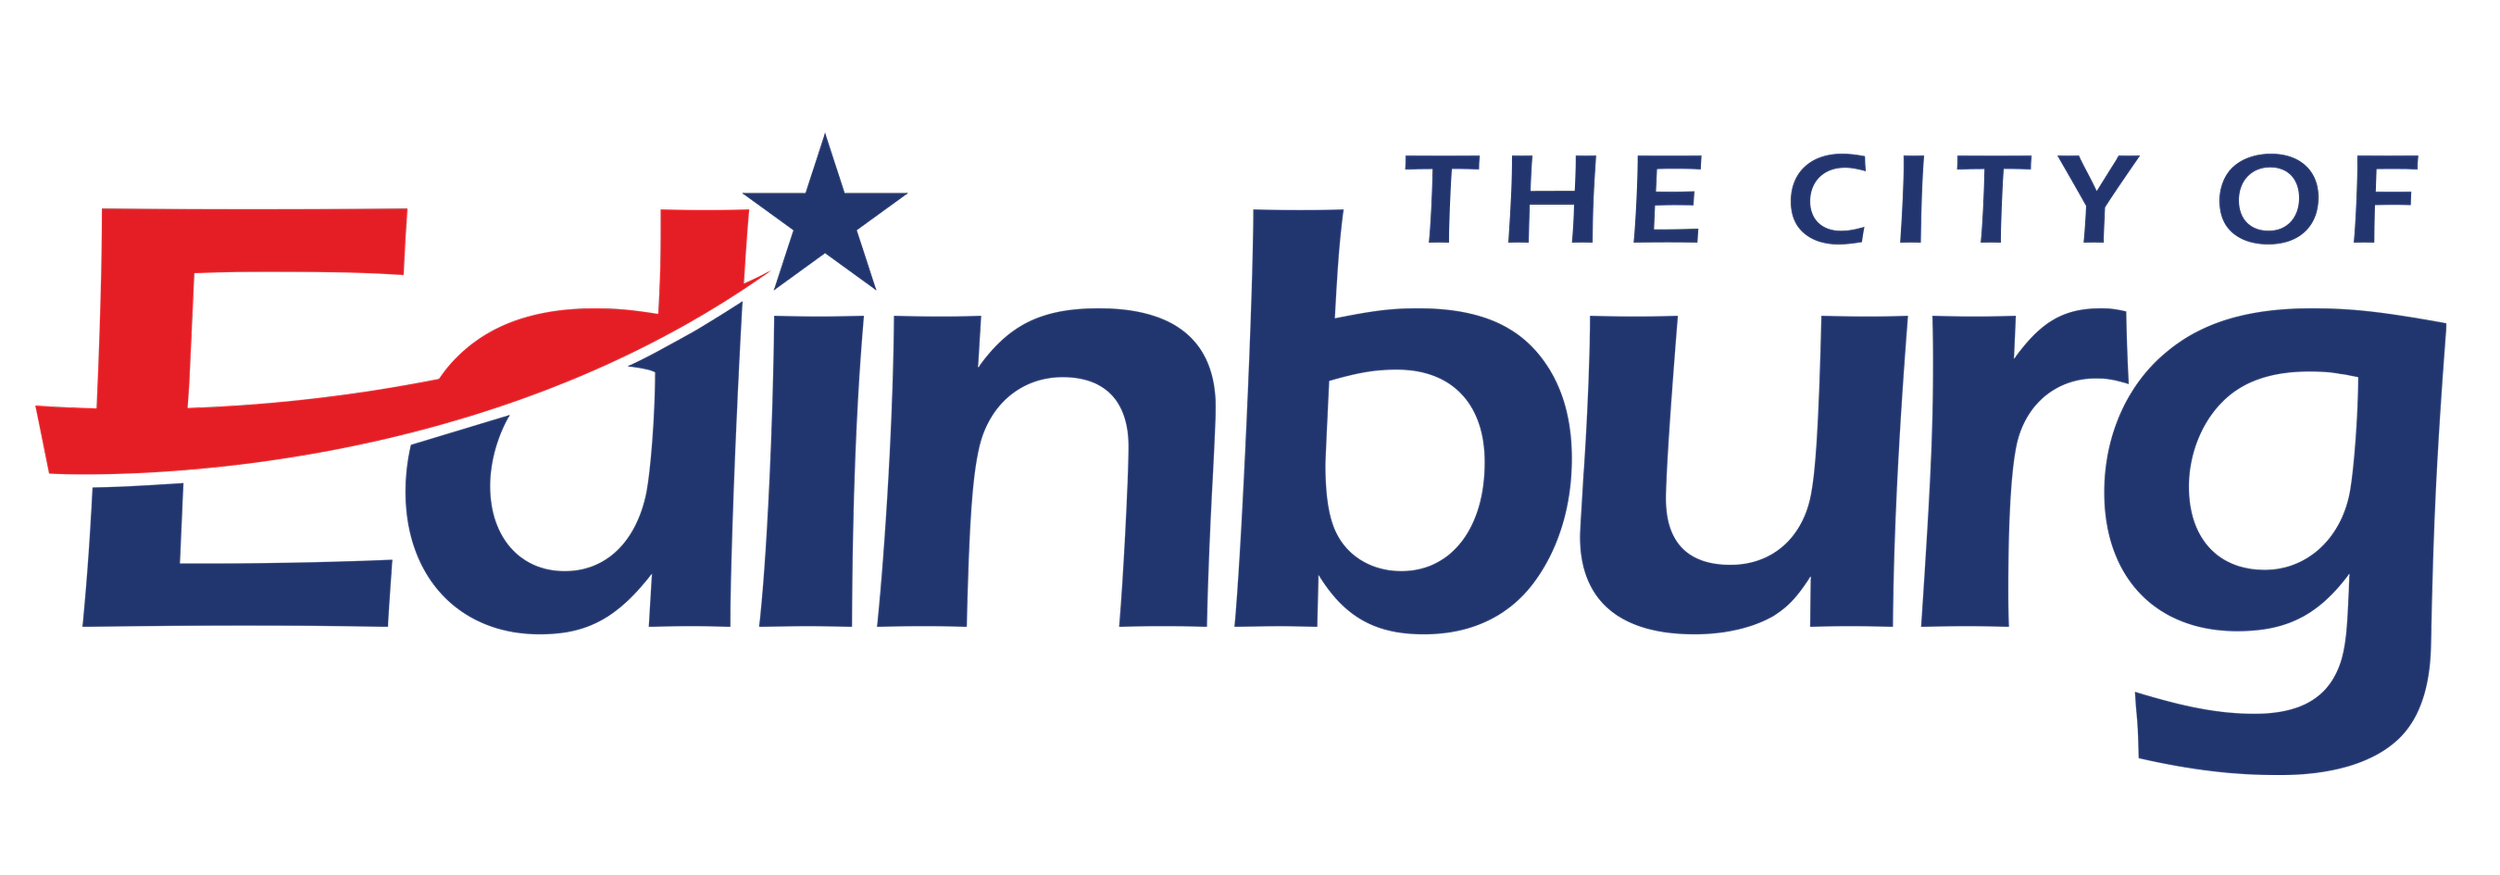 Standard City of Edinburg Logo.png